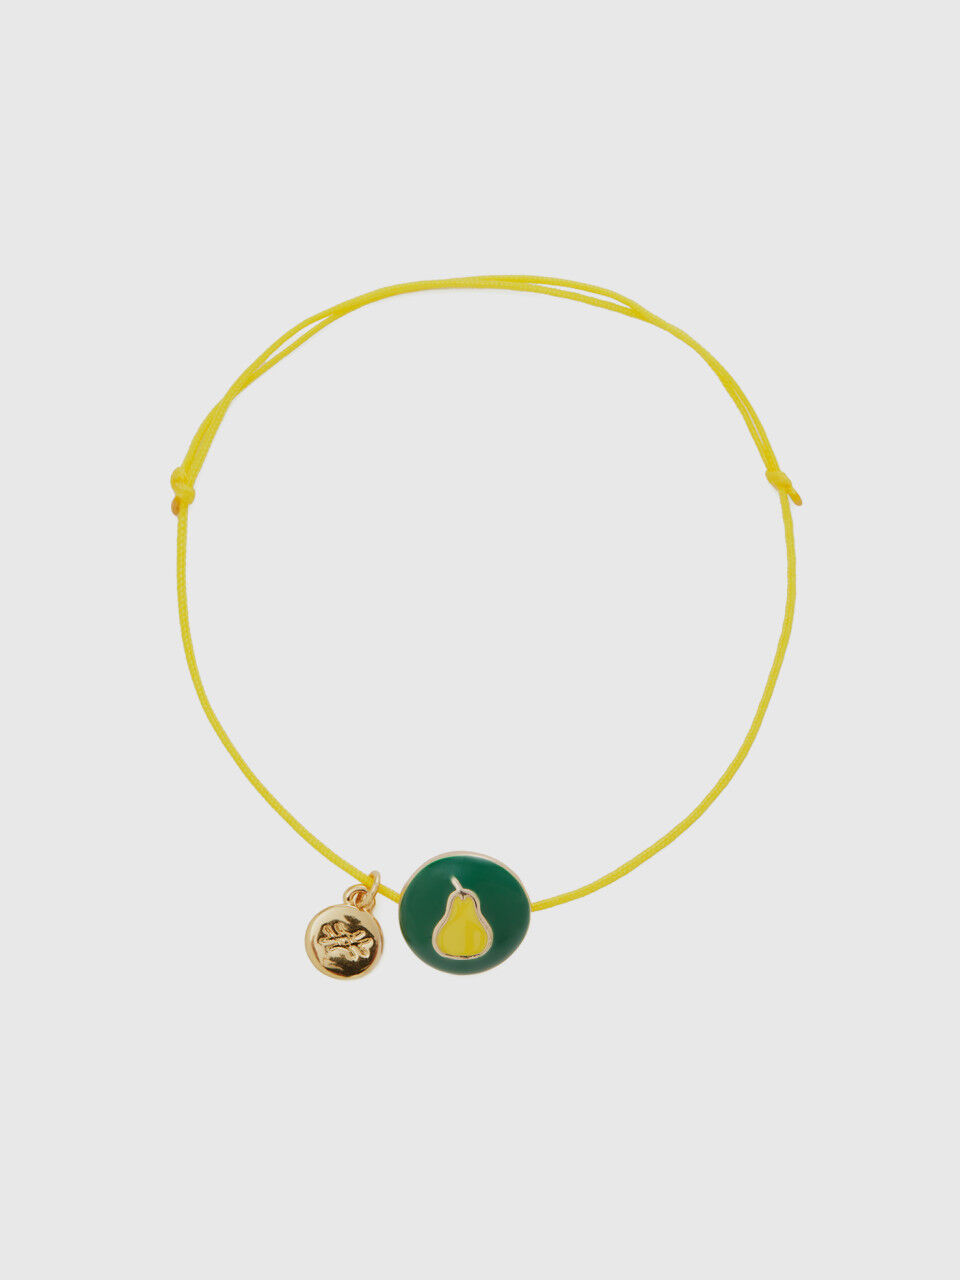 Green bracelet with pear pendant